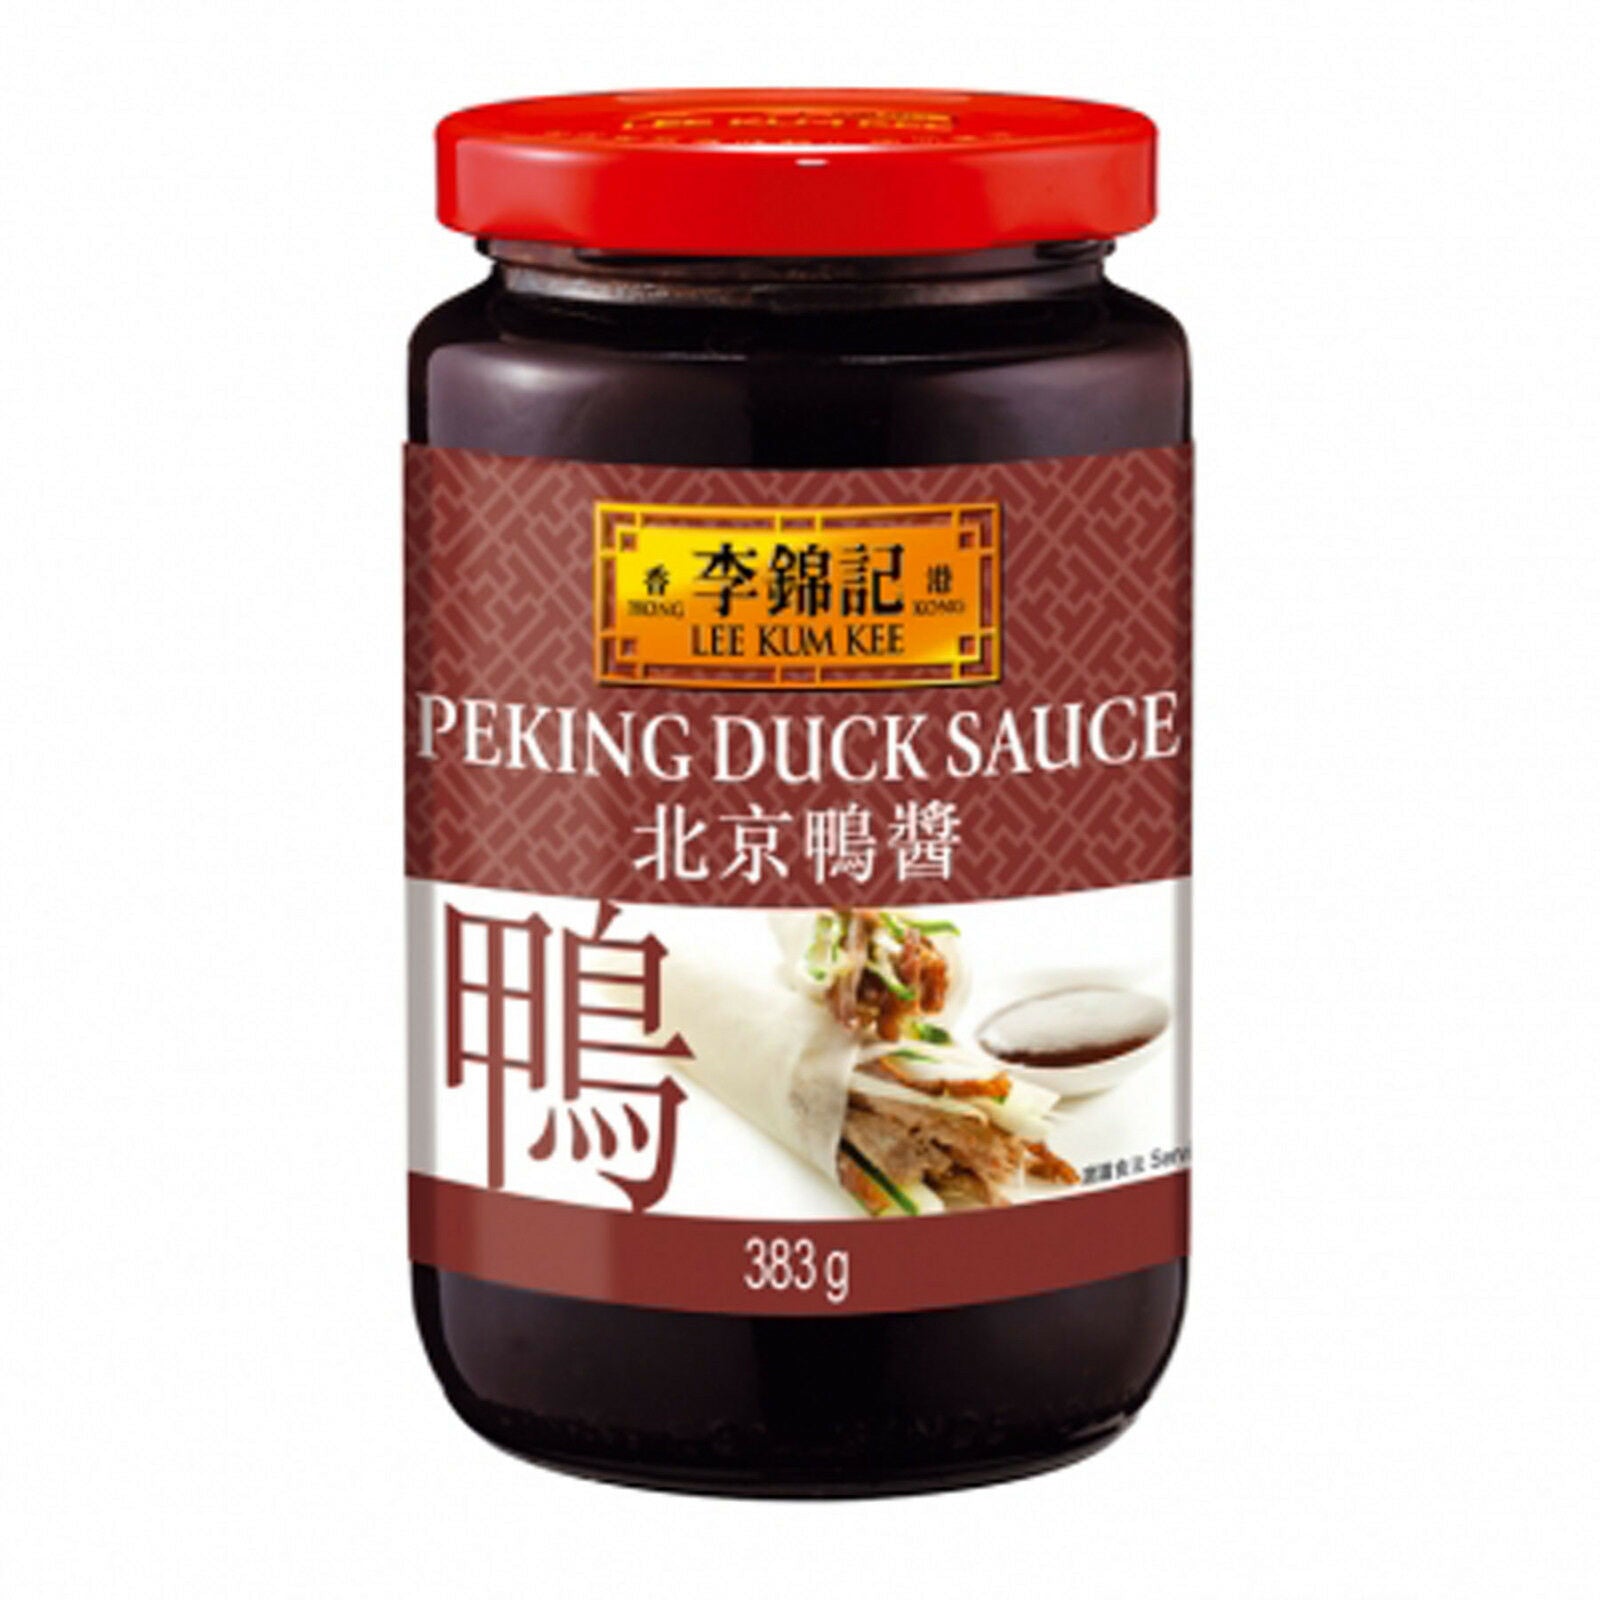 Peking Ente Sauce - Sốt chấm vịt 383g Lee Kum Kee